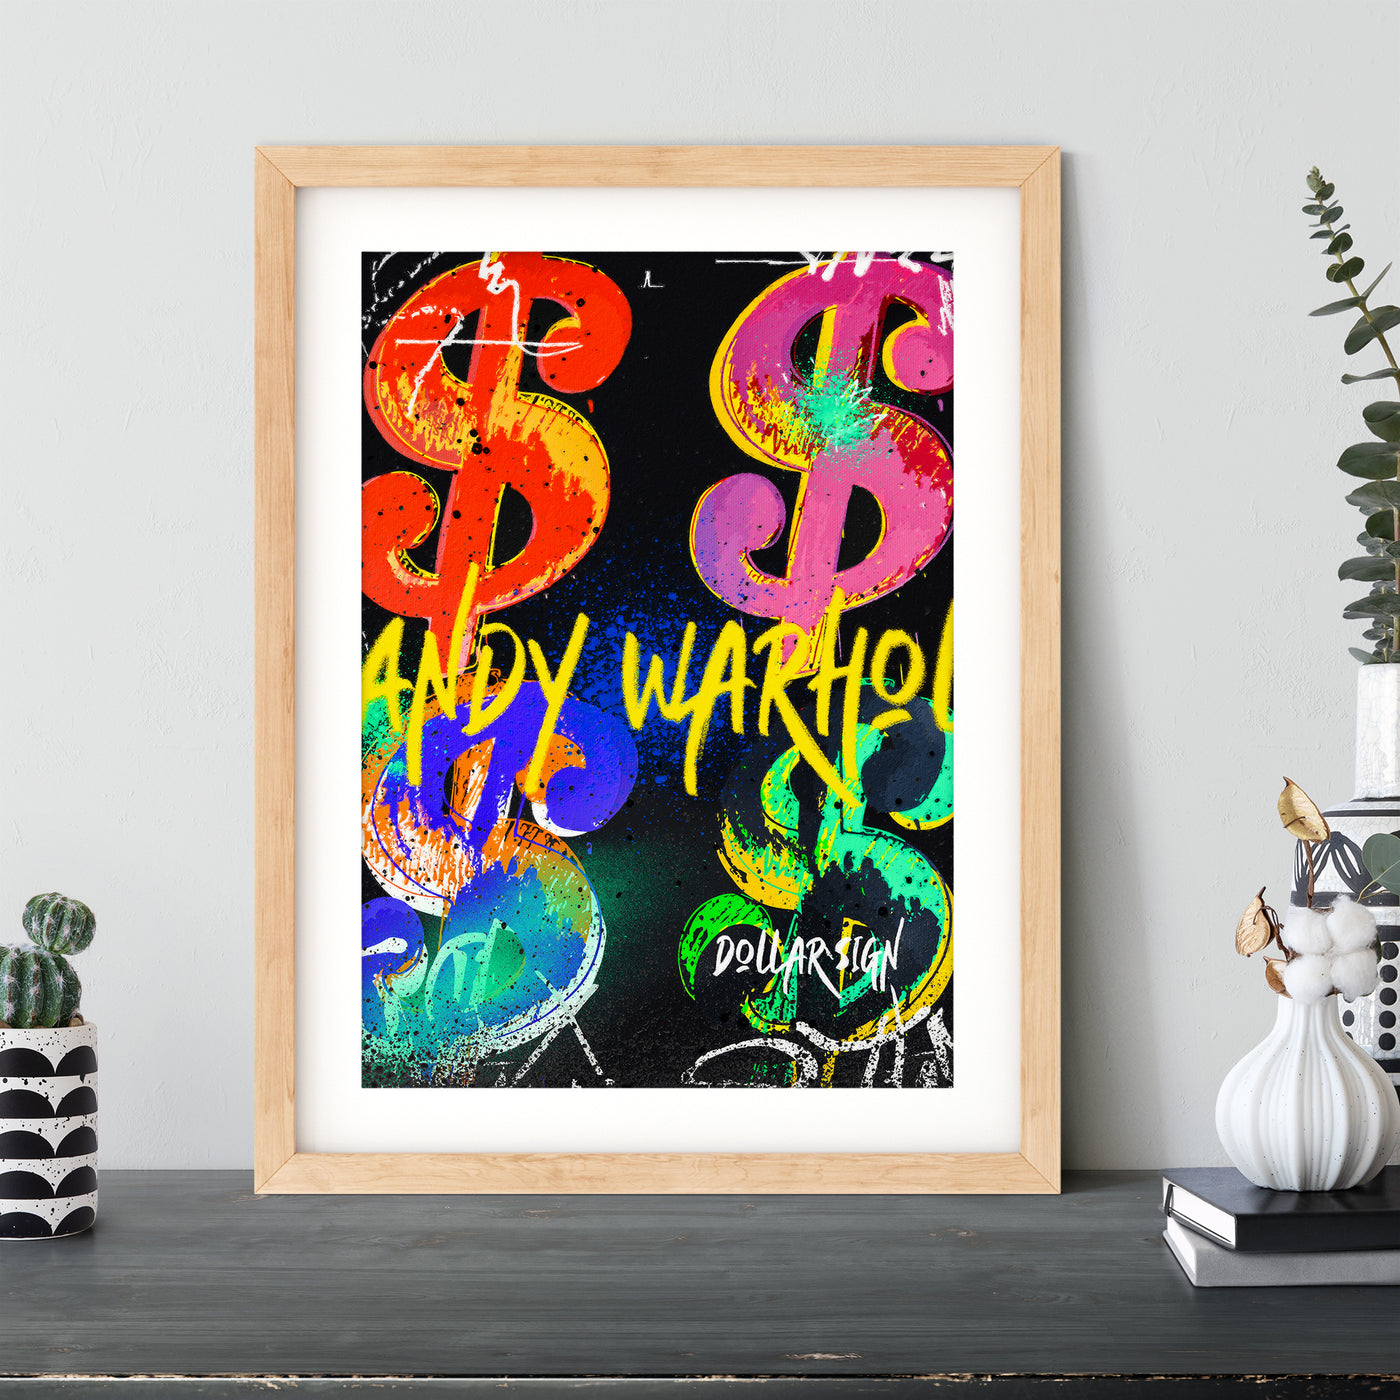 Andy Warhol Dollar Sign #2